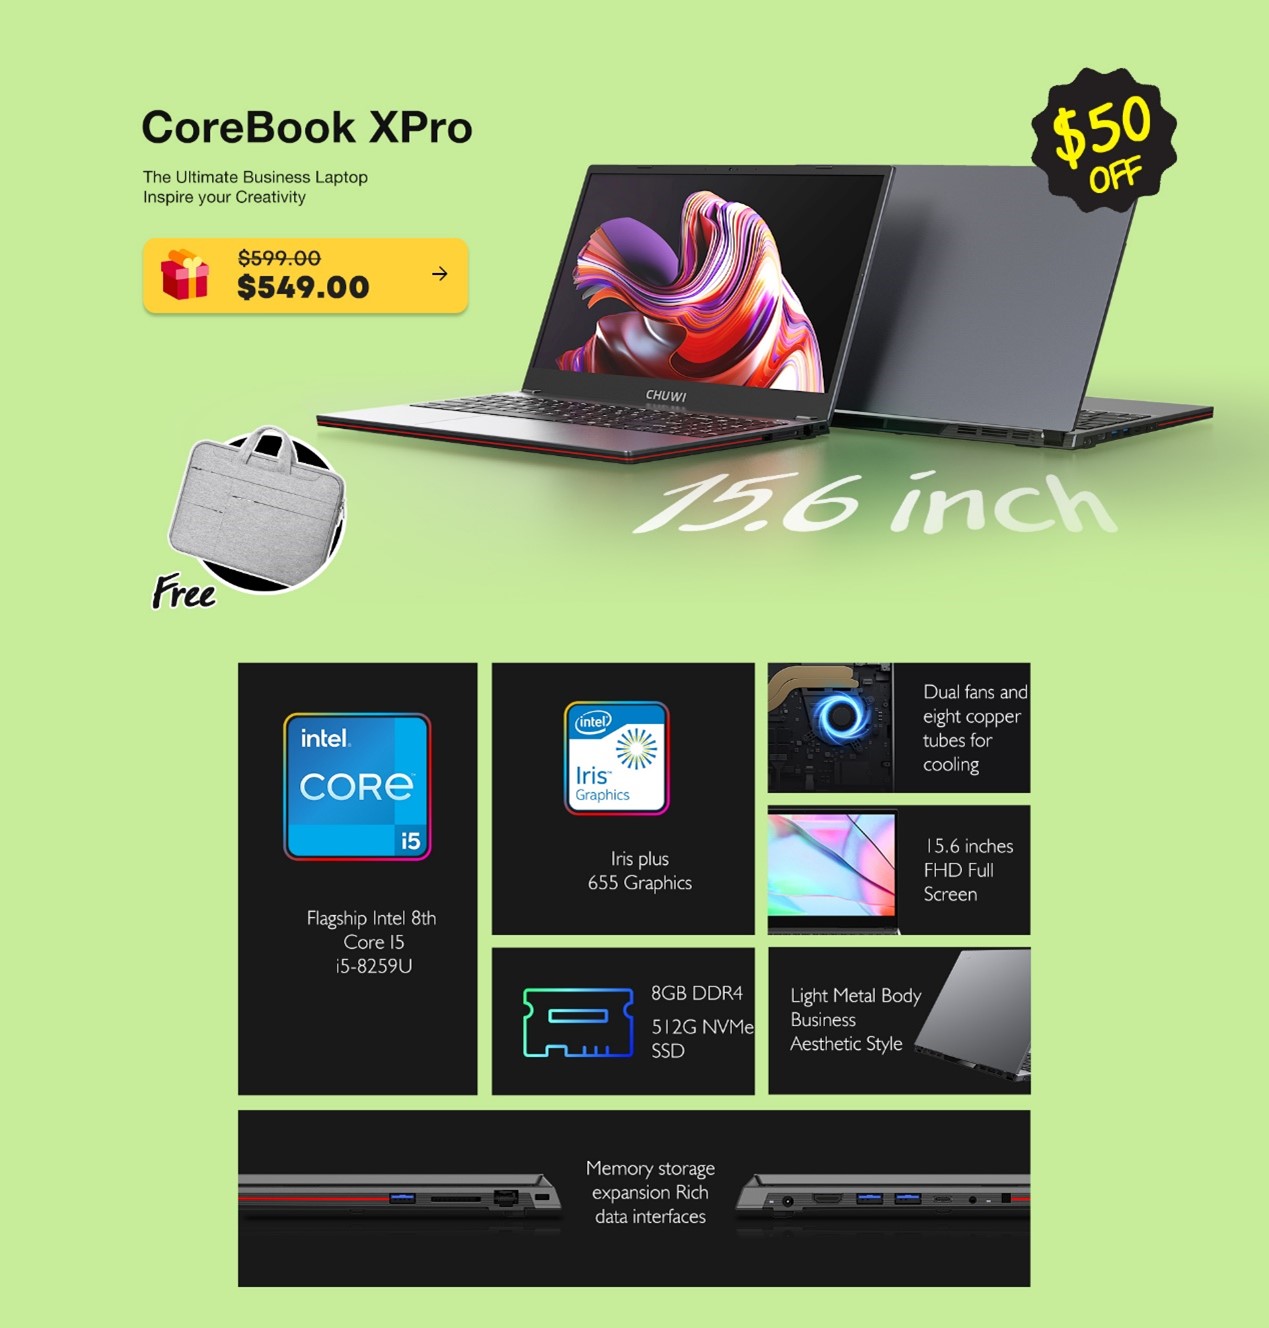 CHUWI CoreBook XPro